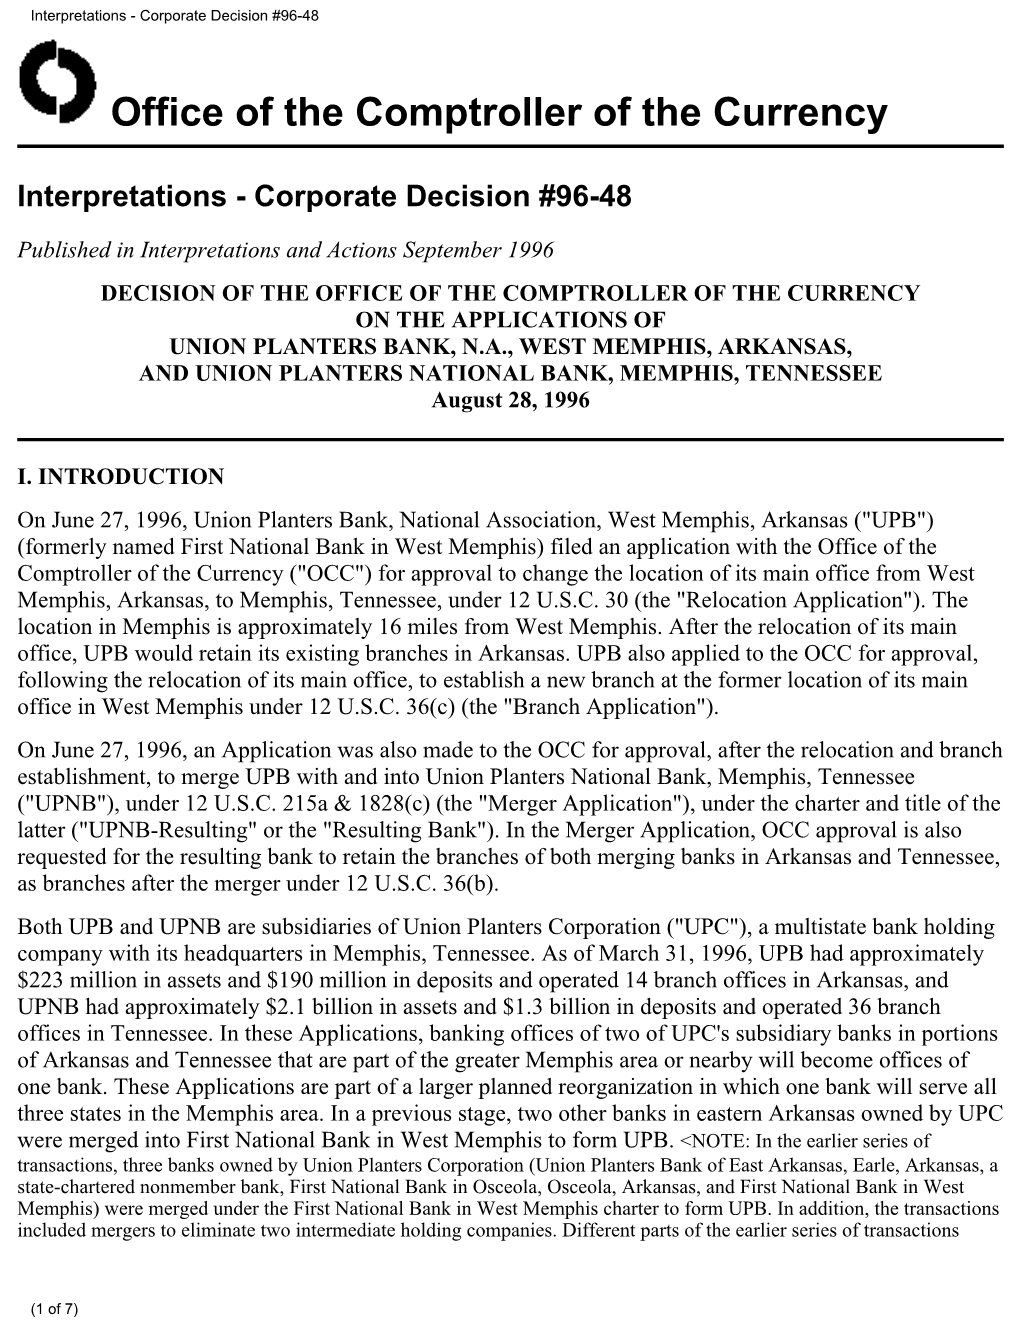 Interpretations - Corporate Decision #96-48